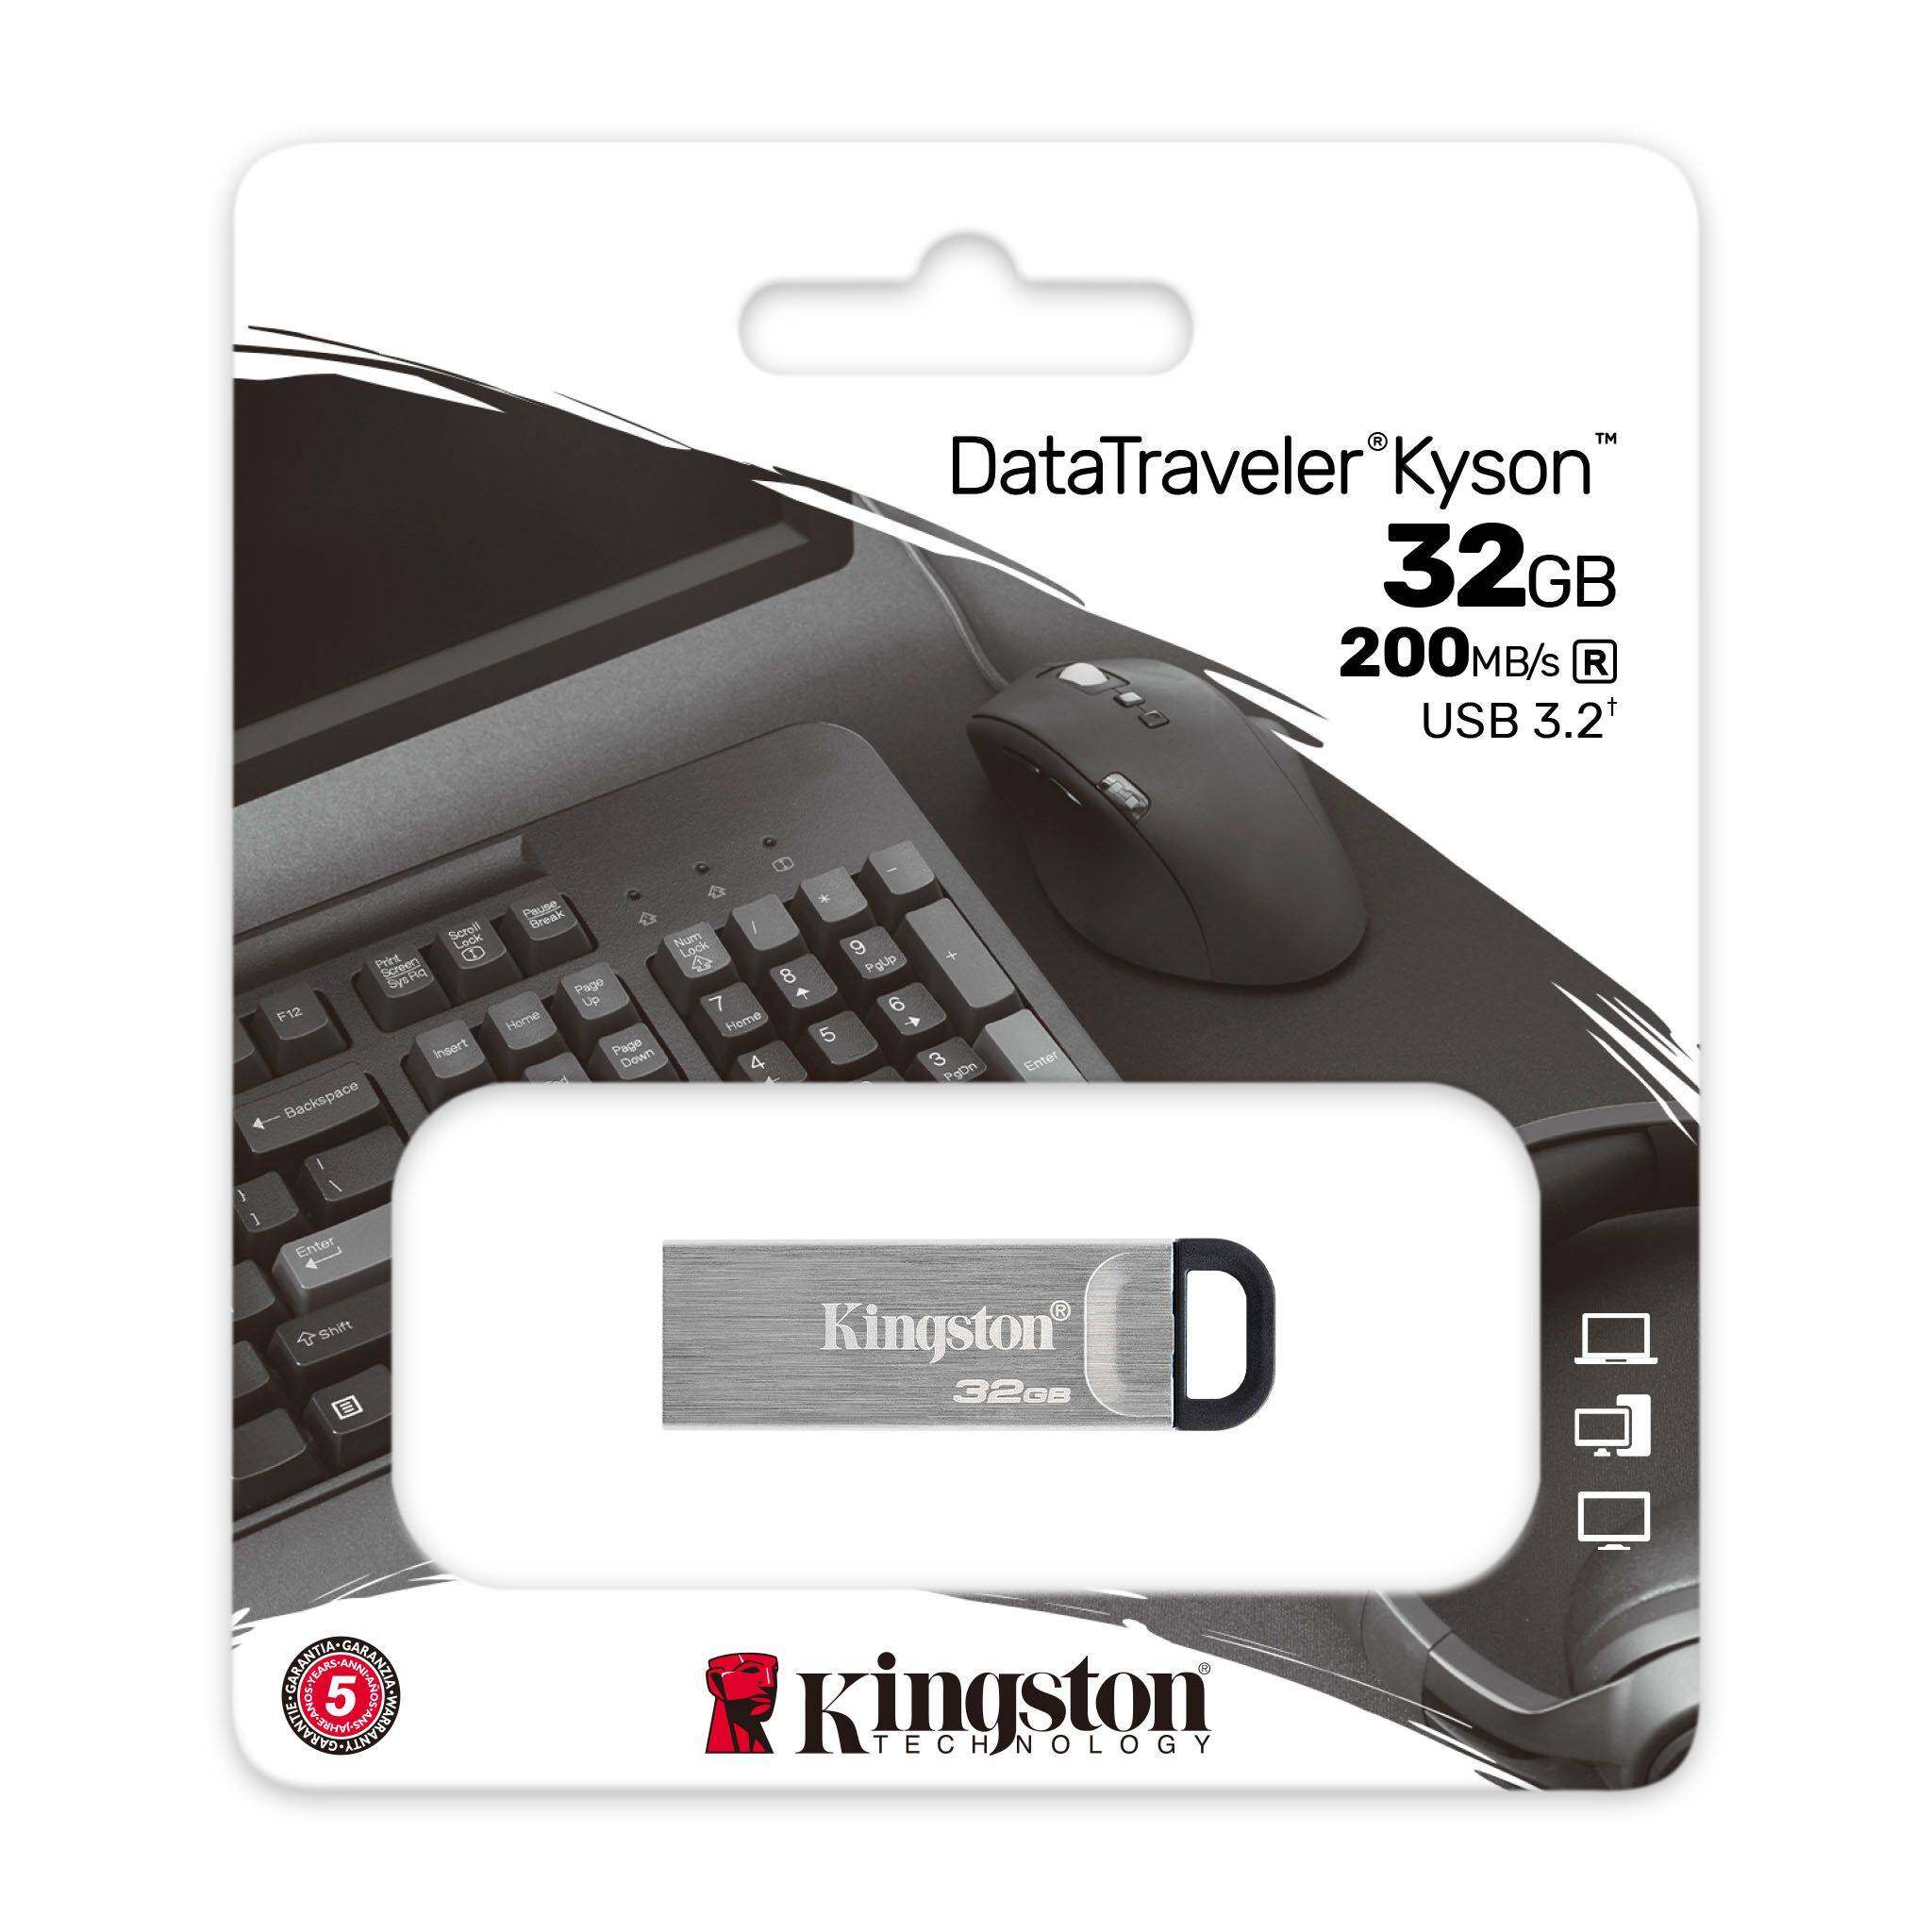 Kingston DataTraveler Kyson DTKN USB Pendrive (32GB / 64GB / 128GB / 256GB) with USB 3.2 Connection, Capless Design, Metal Casing, Strap Hole